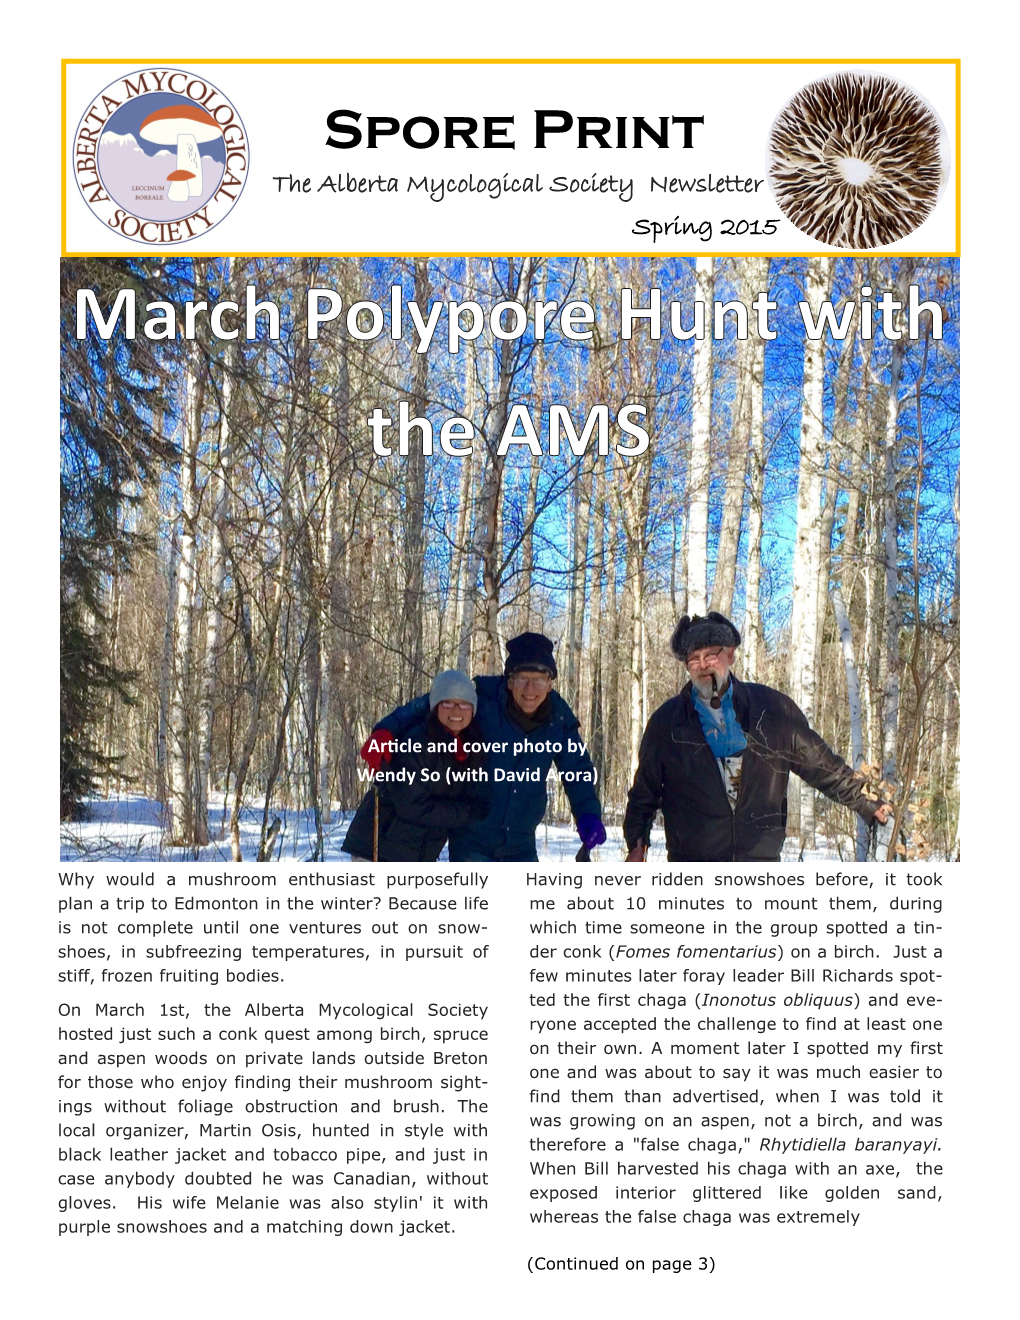 Spore Print the Alberta Mycological Society Newsletter Spring 2015